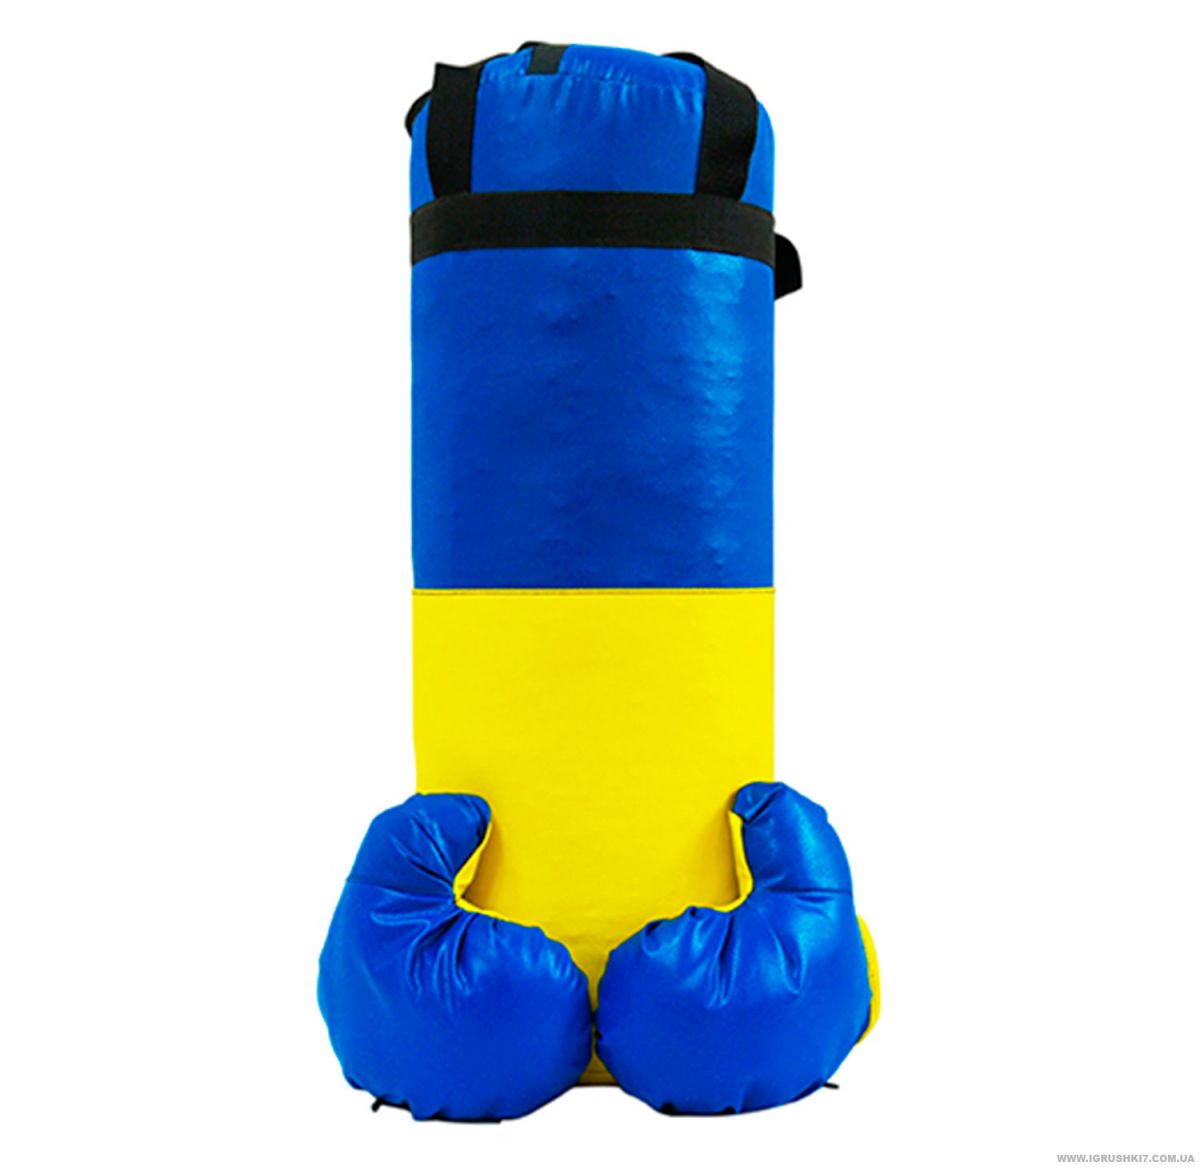 Боксерский набор "Ukraine", средний